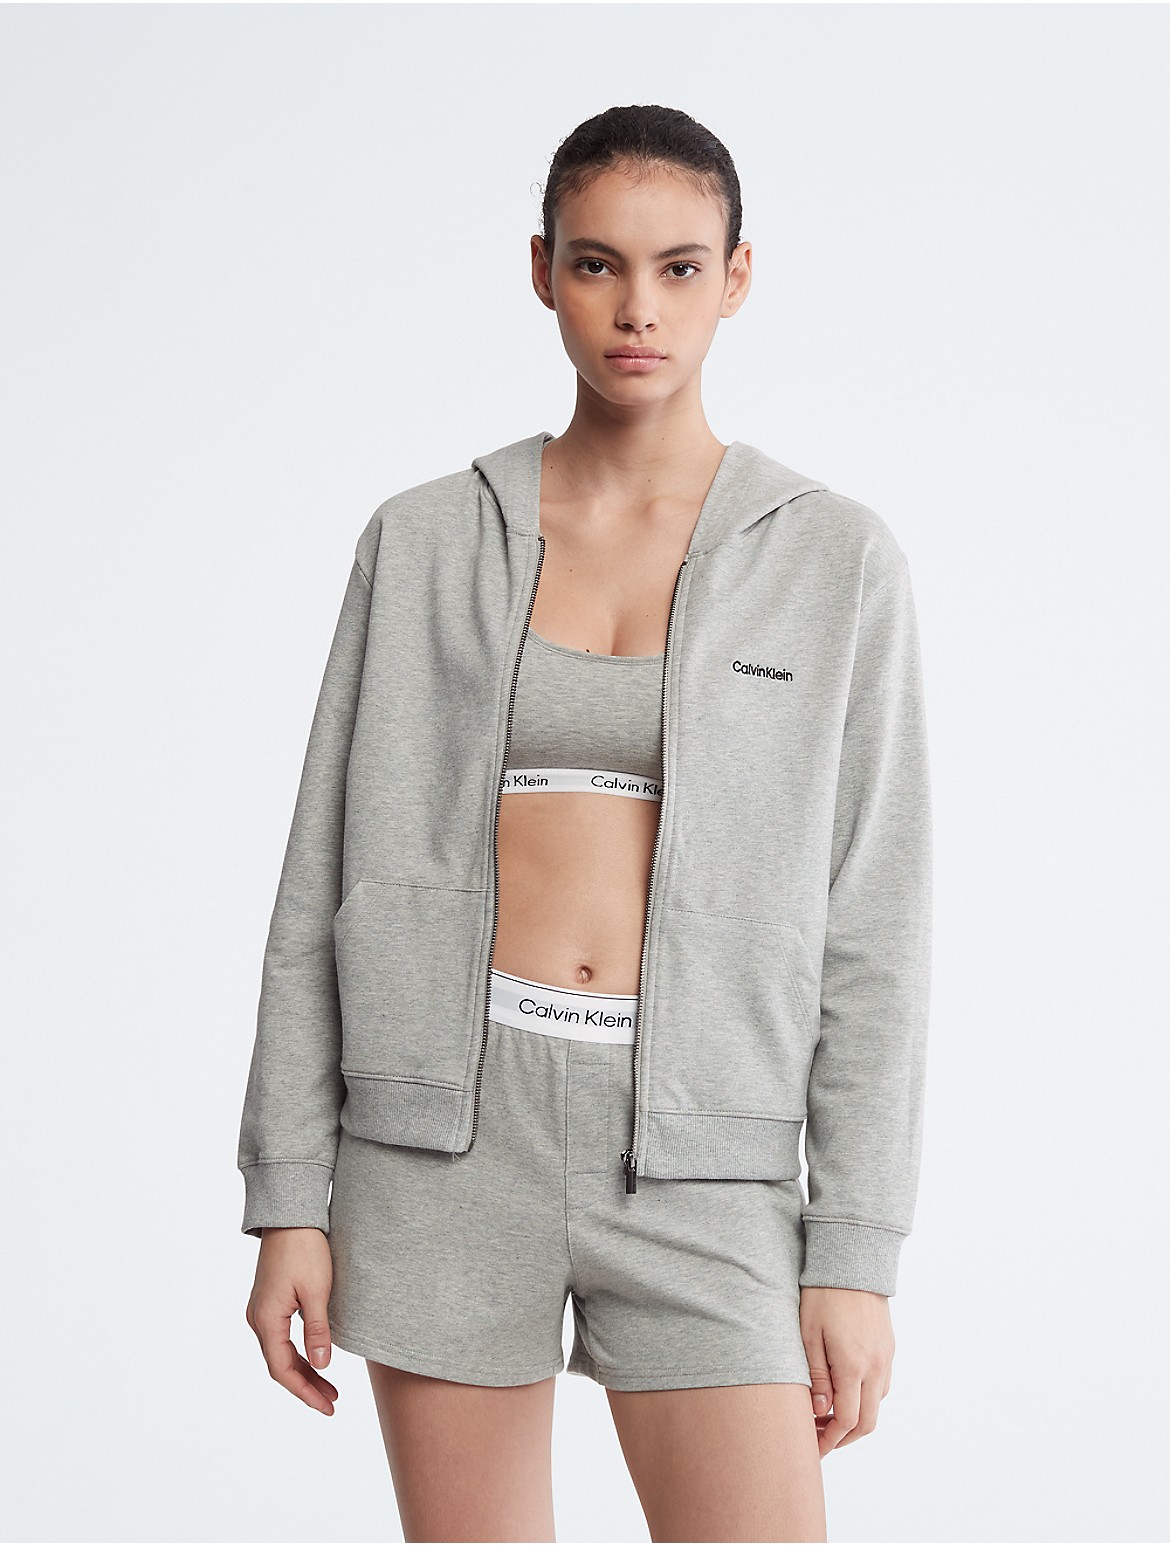 Calvin Klein Women's Modern Cotton Lounge Full Zip Hoodie - Grey - XS